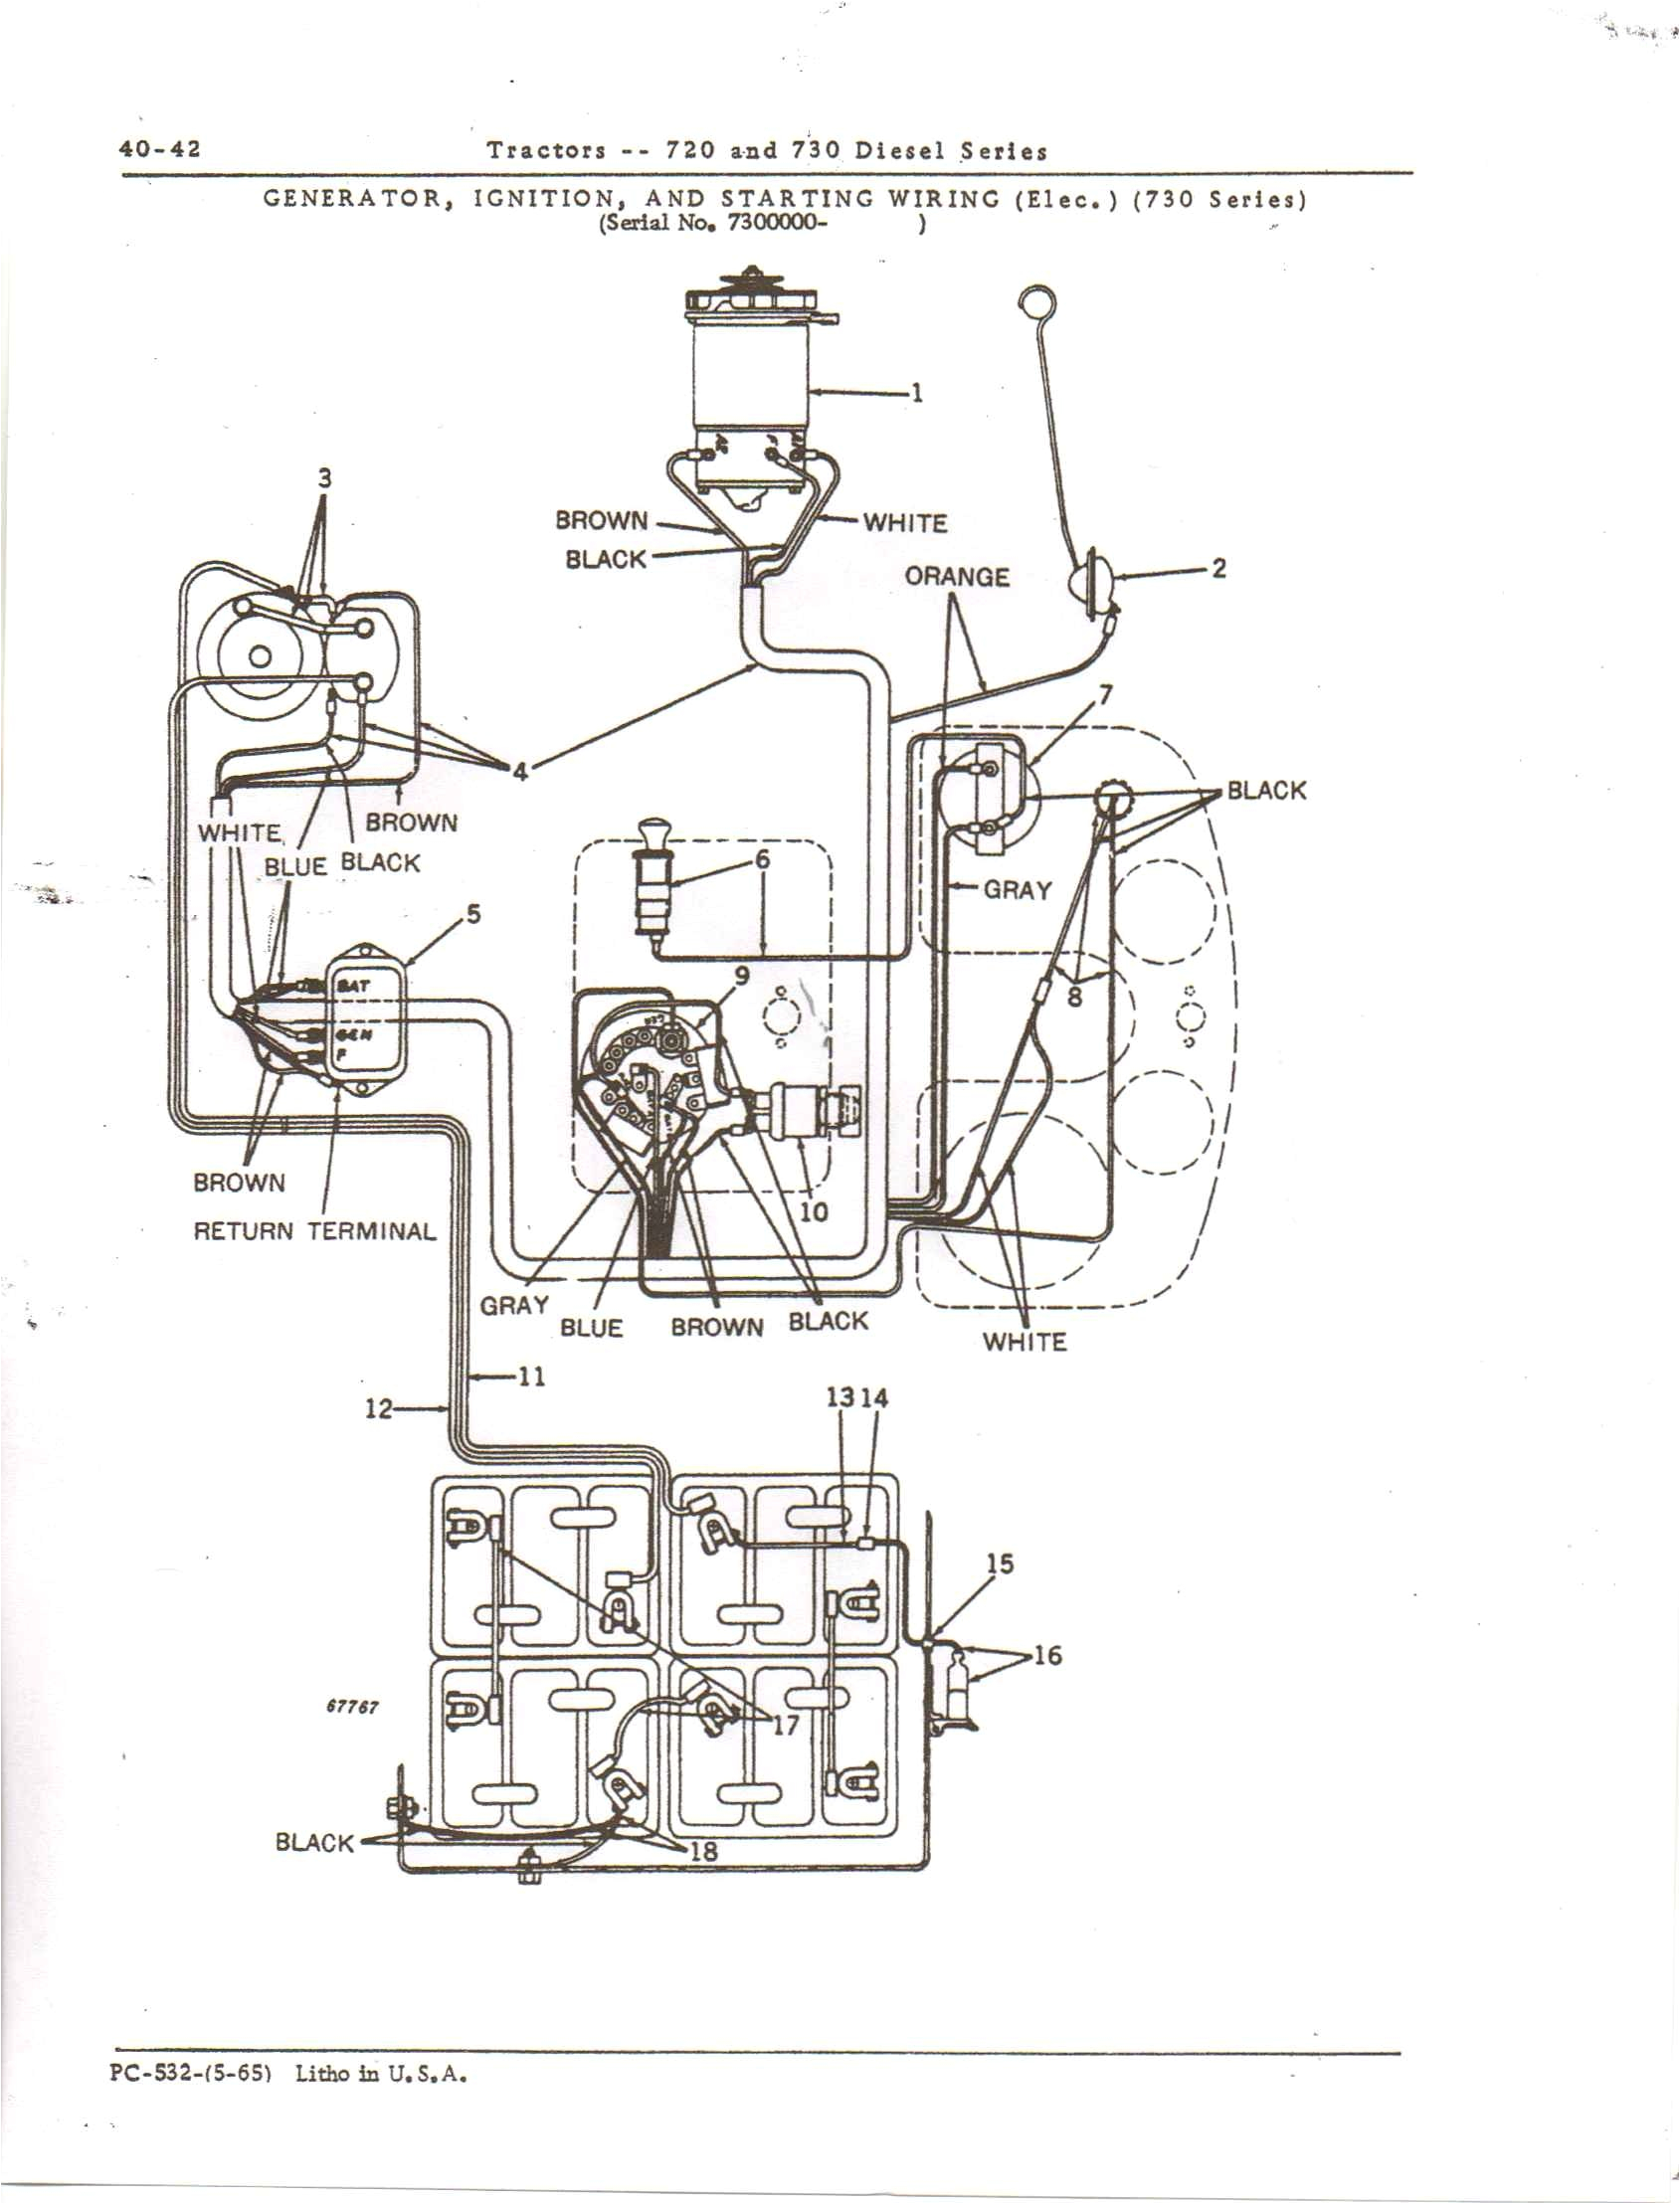 wiring diagram for 4020 john deere tractor wiring diagram john deere 4020 wiring diagram fuel guage